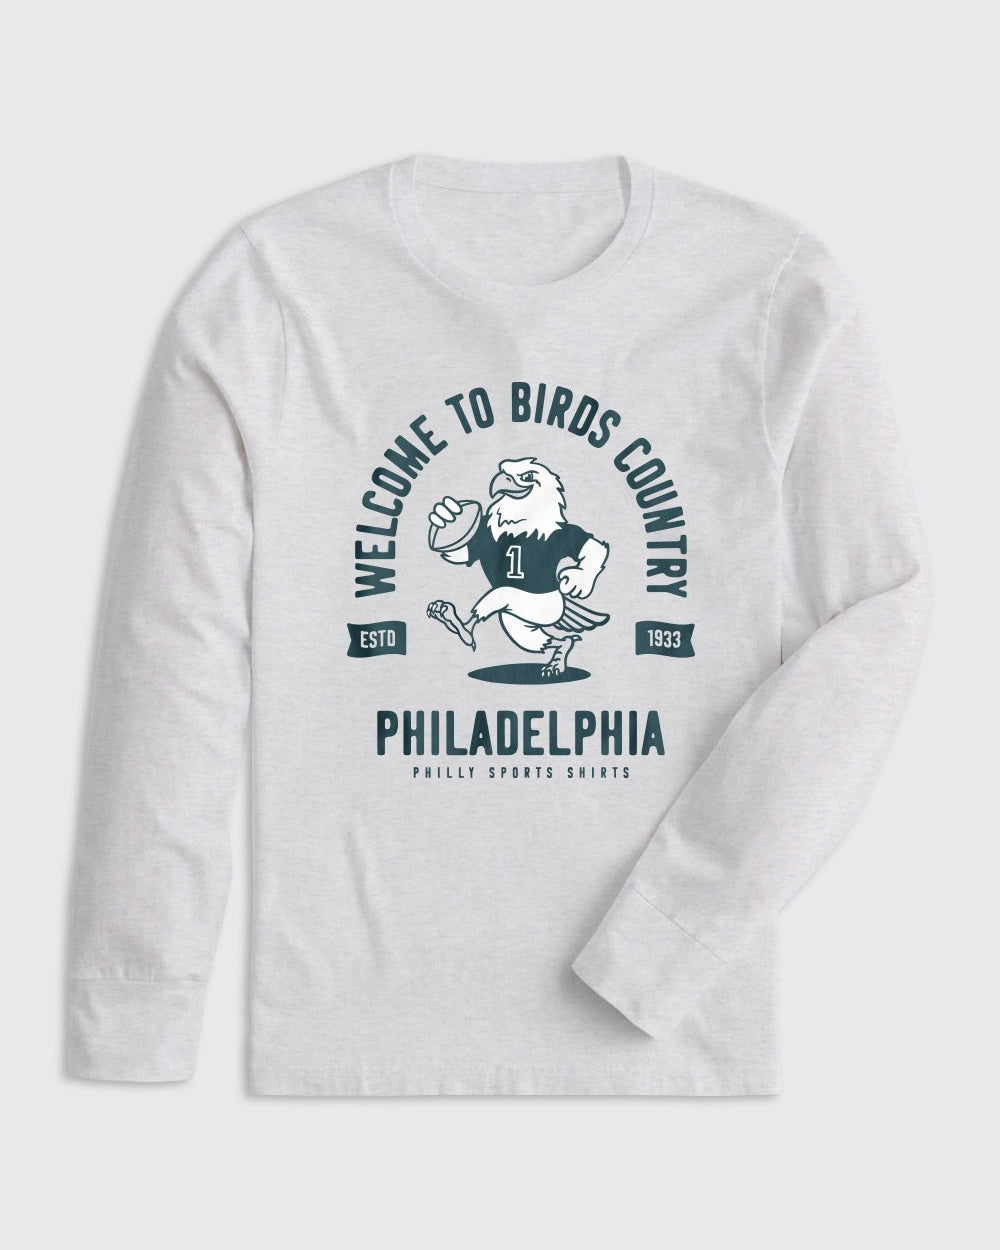 Philadelphia Phillies Long Sleeve Shirt  Long sleeve shirts, Phillies shirt,  Women long sleeve